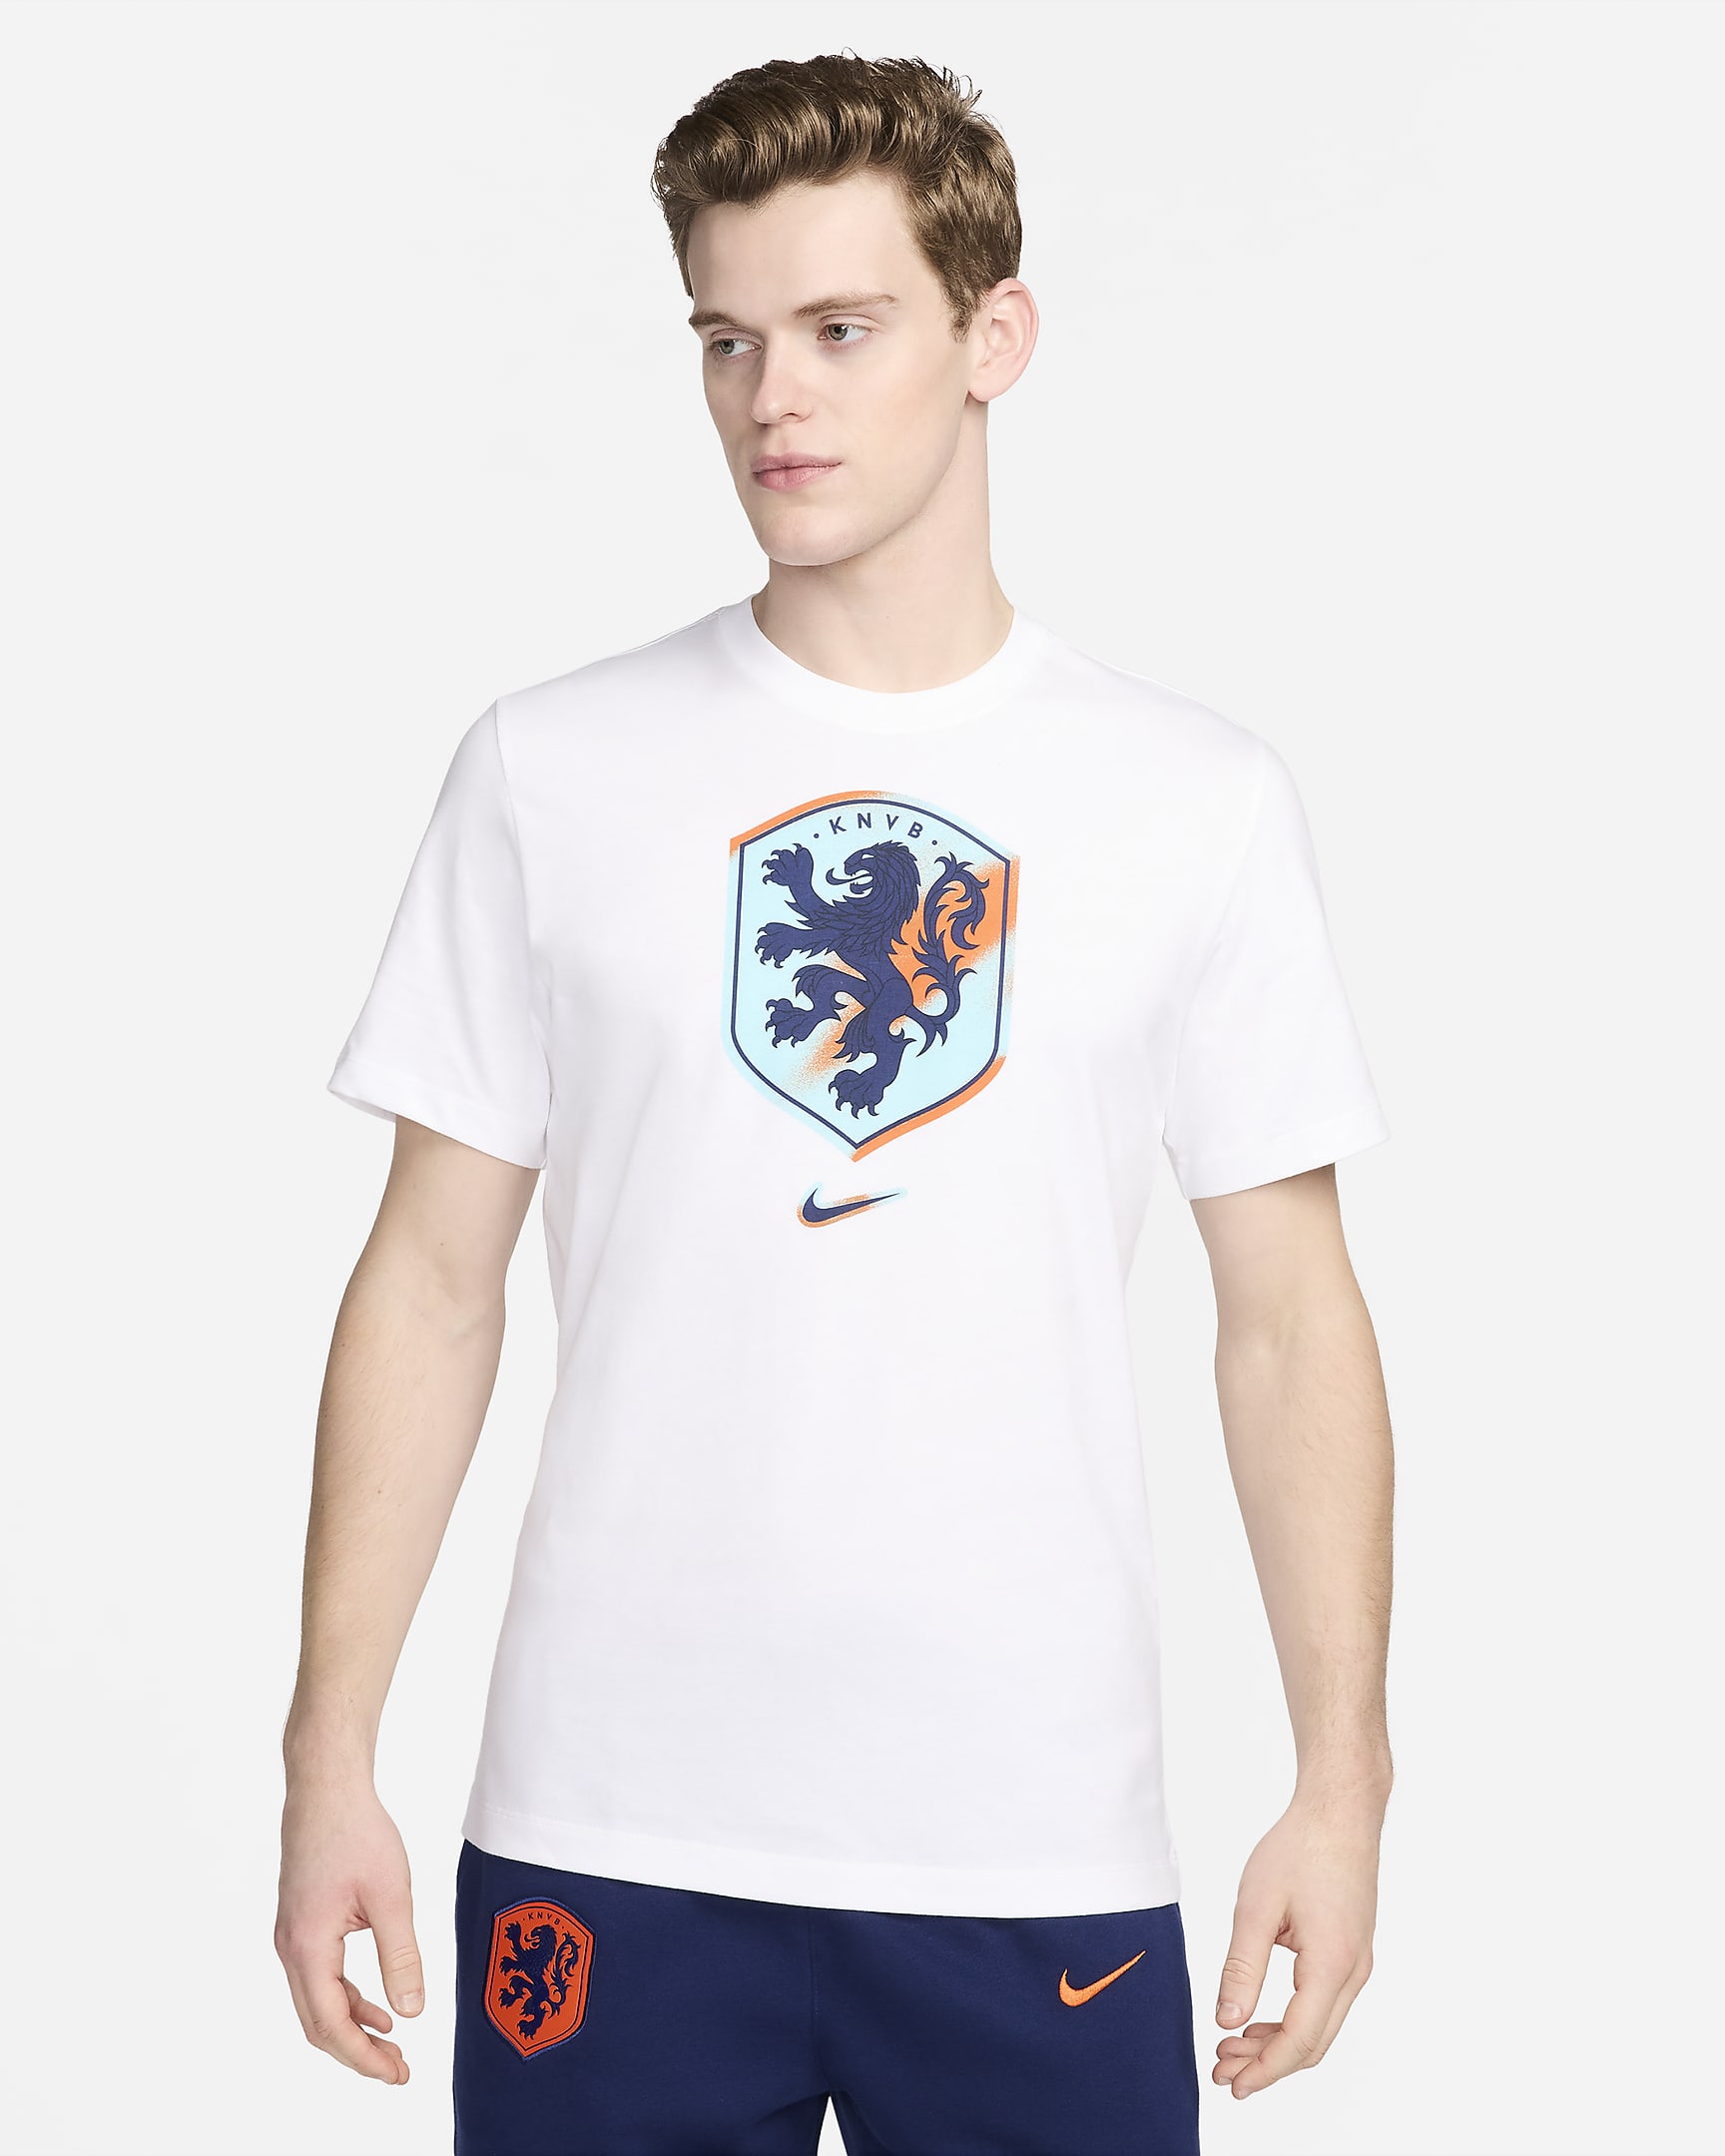 Netherlands Men's Nike Football T-Shirt. Nike AU